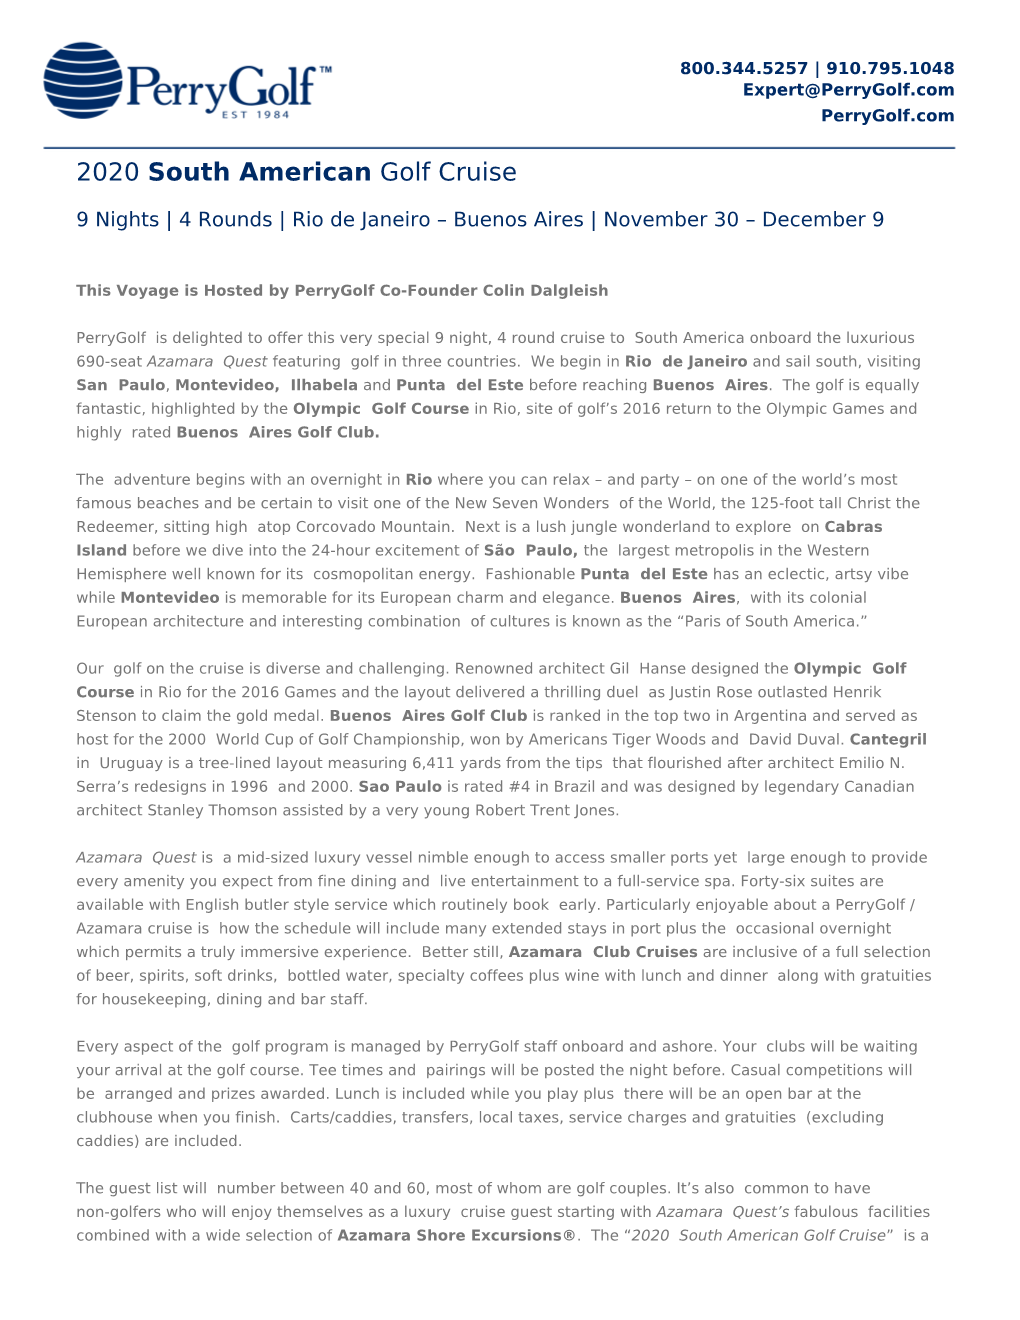 2020 South American Golf Cruise